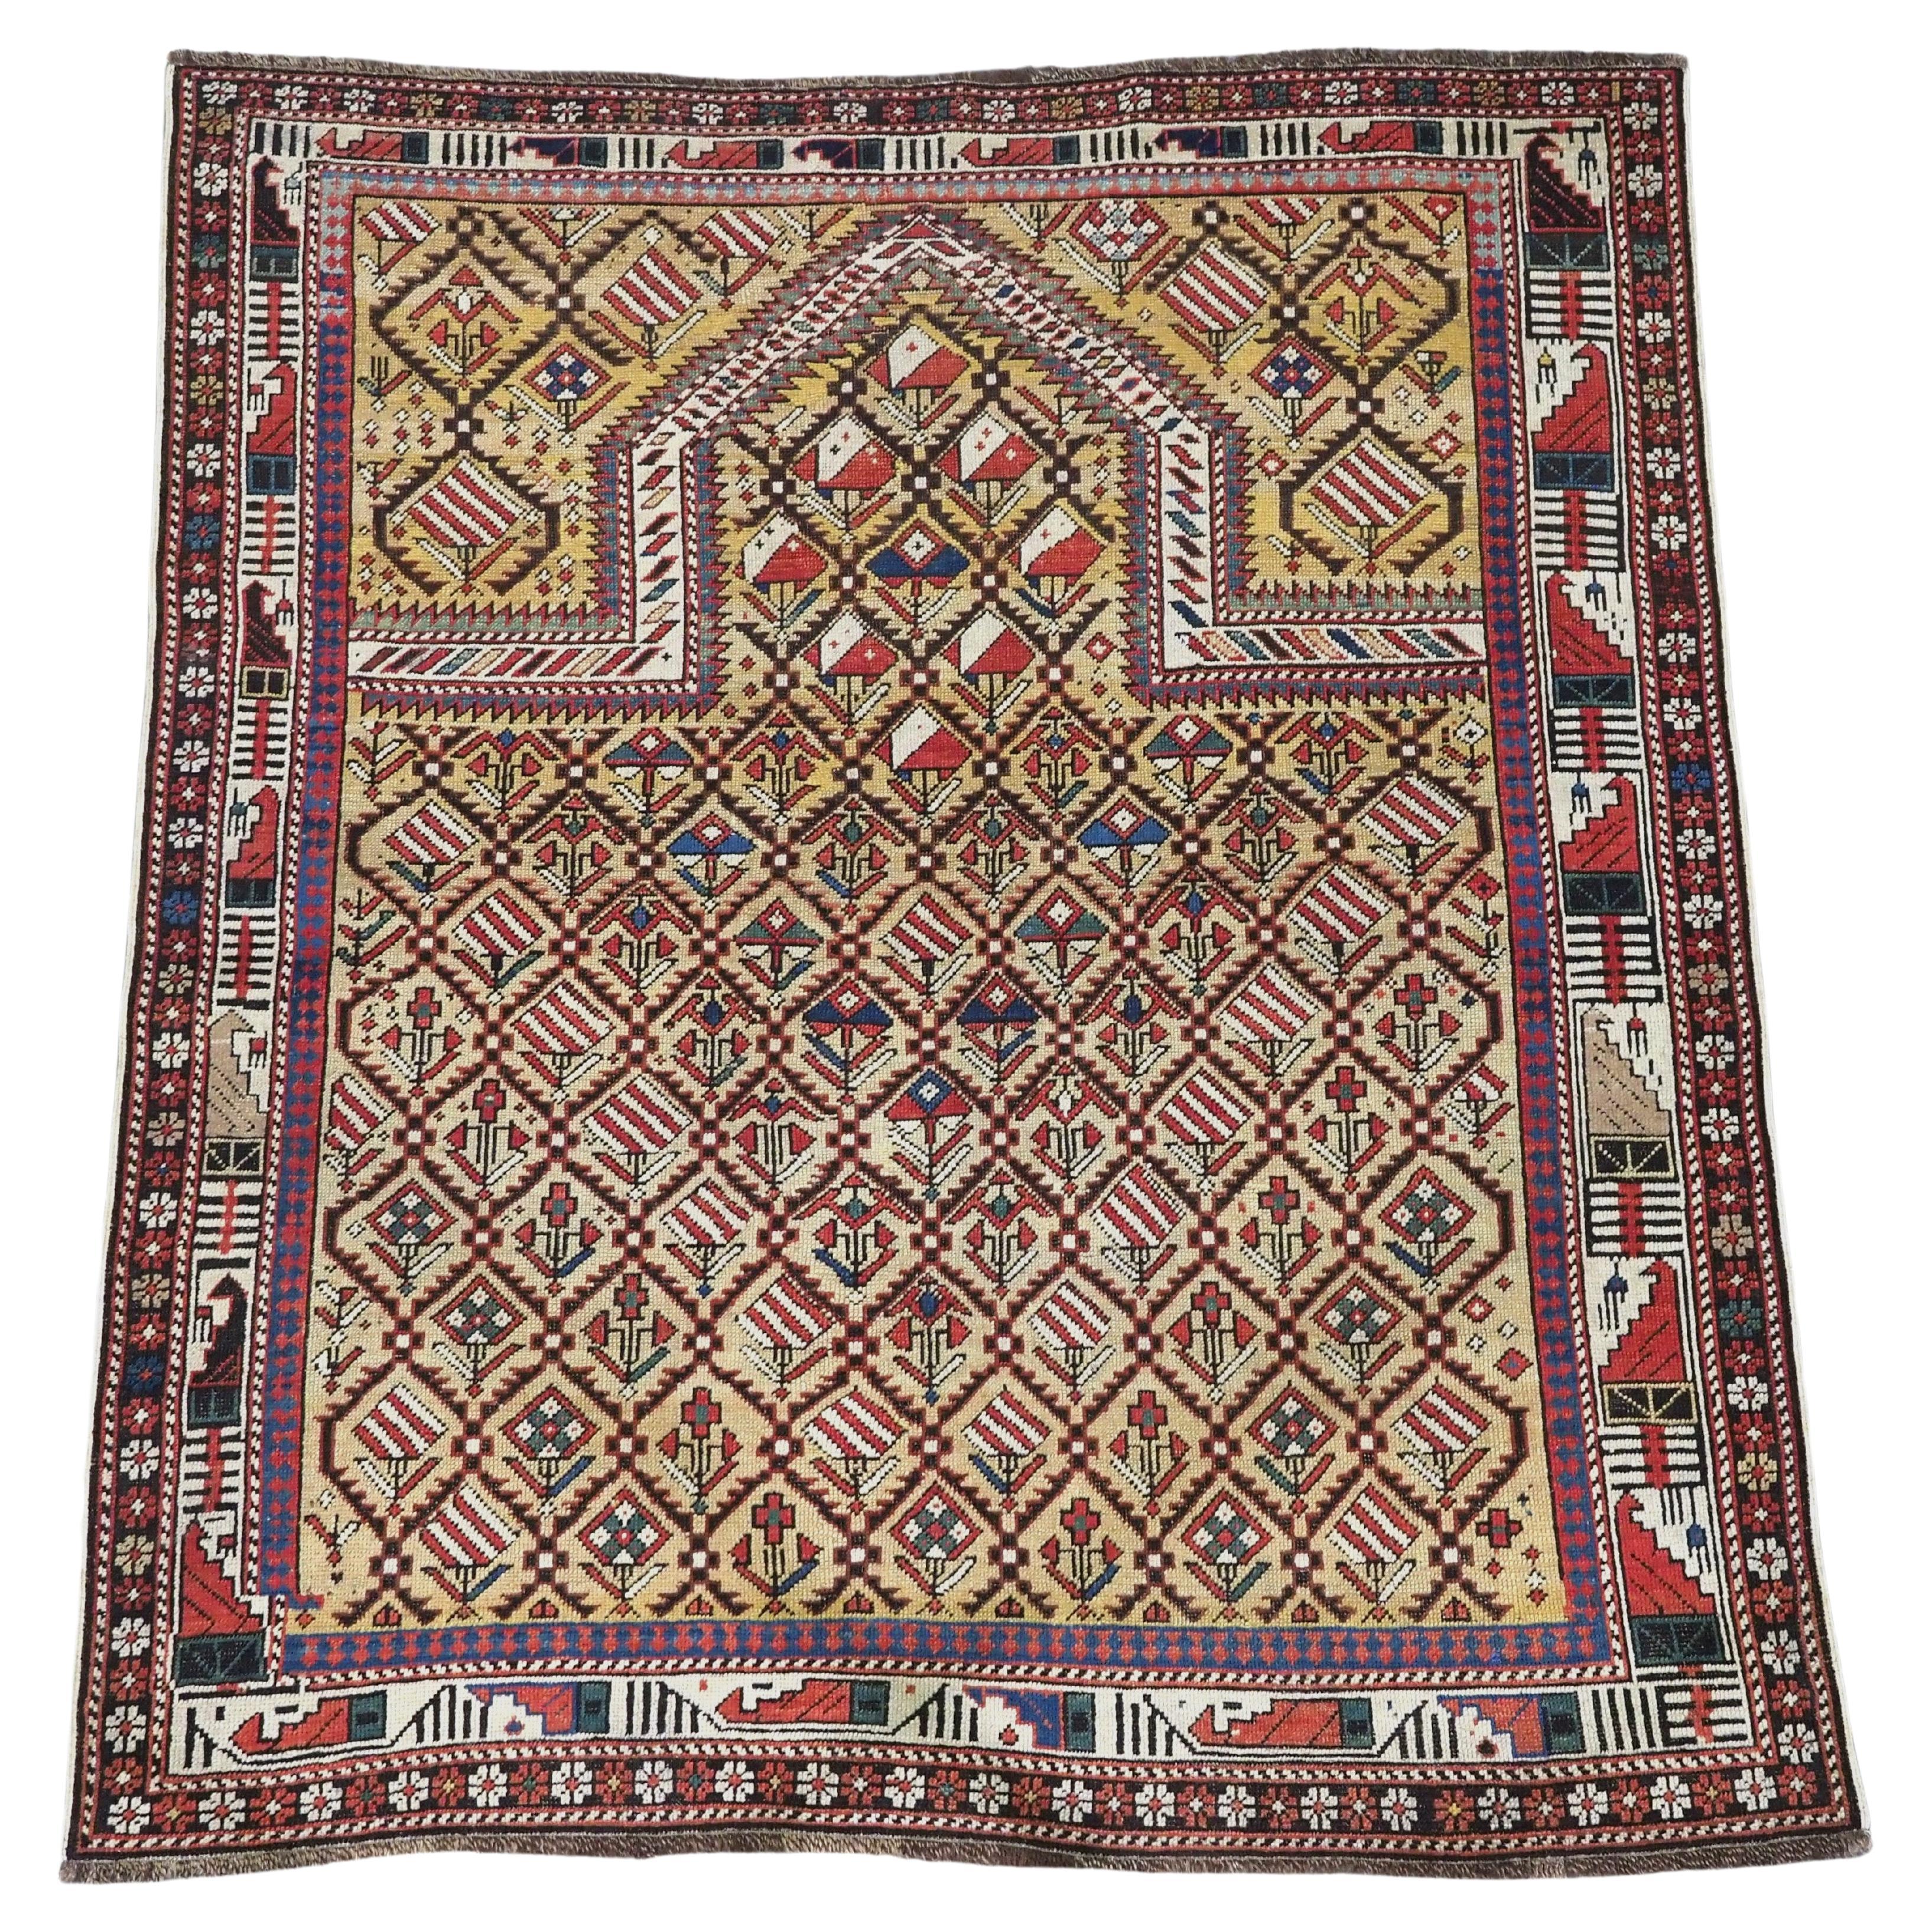 Antique Caucasian Marasali prayer rug of the scarce 'yellow' ground colour.  